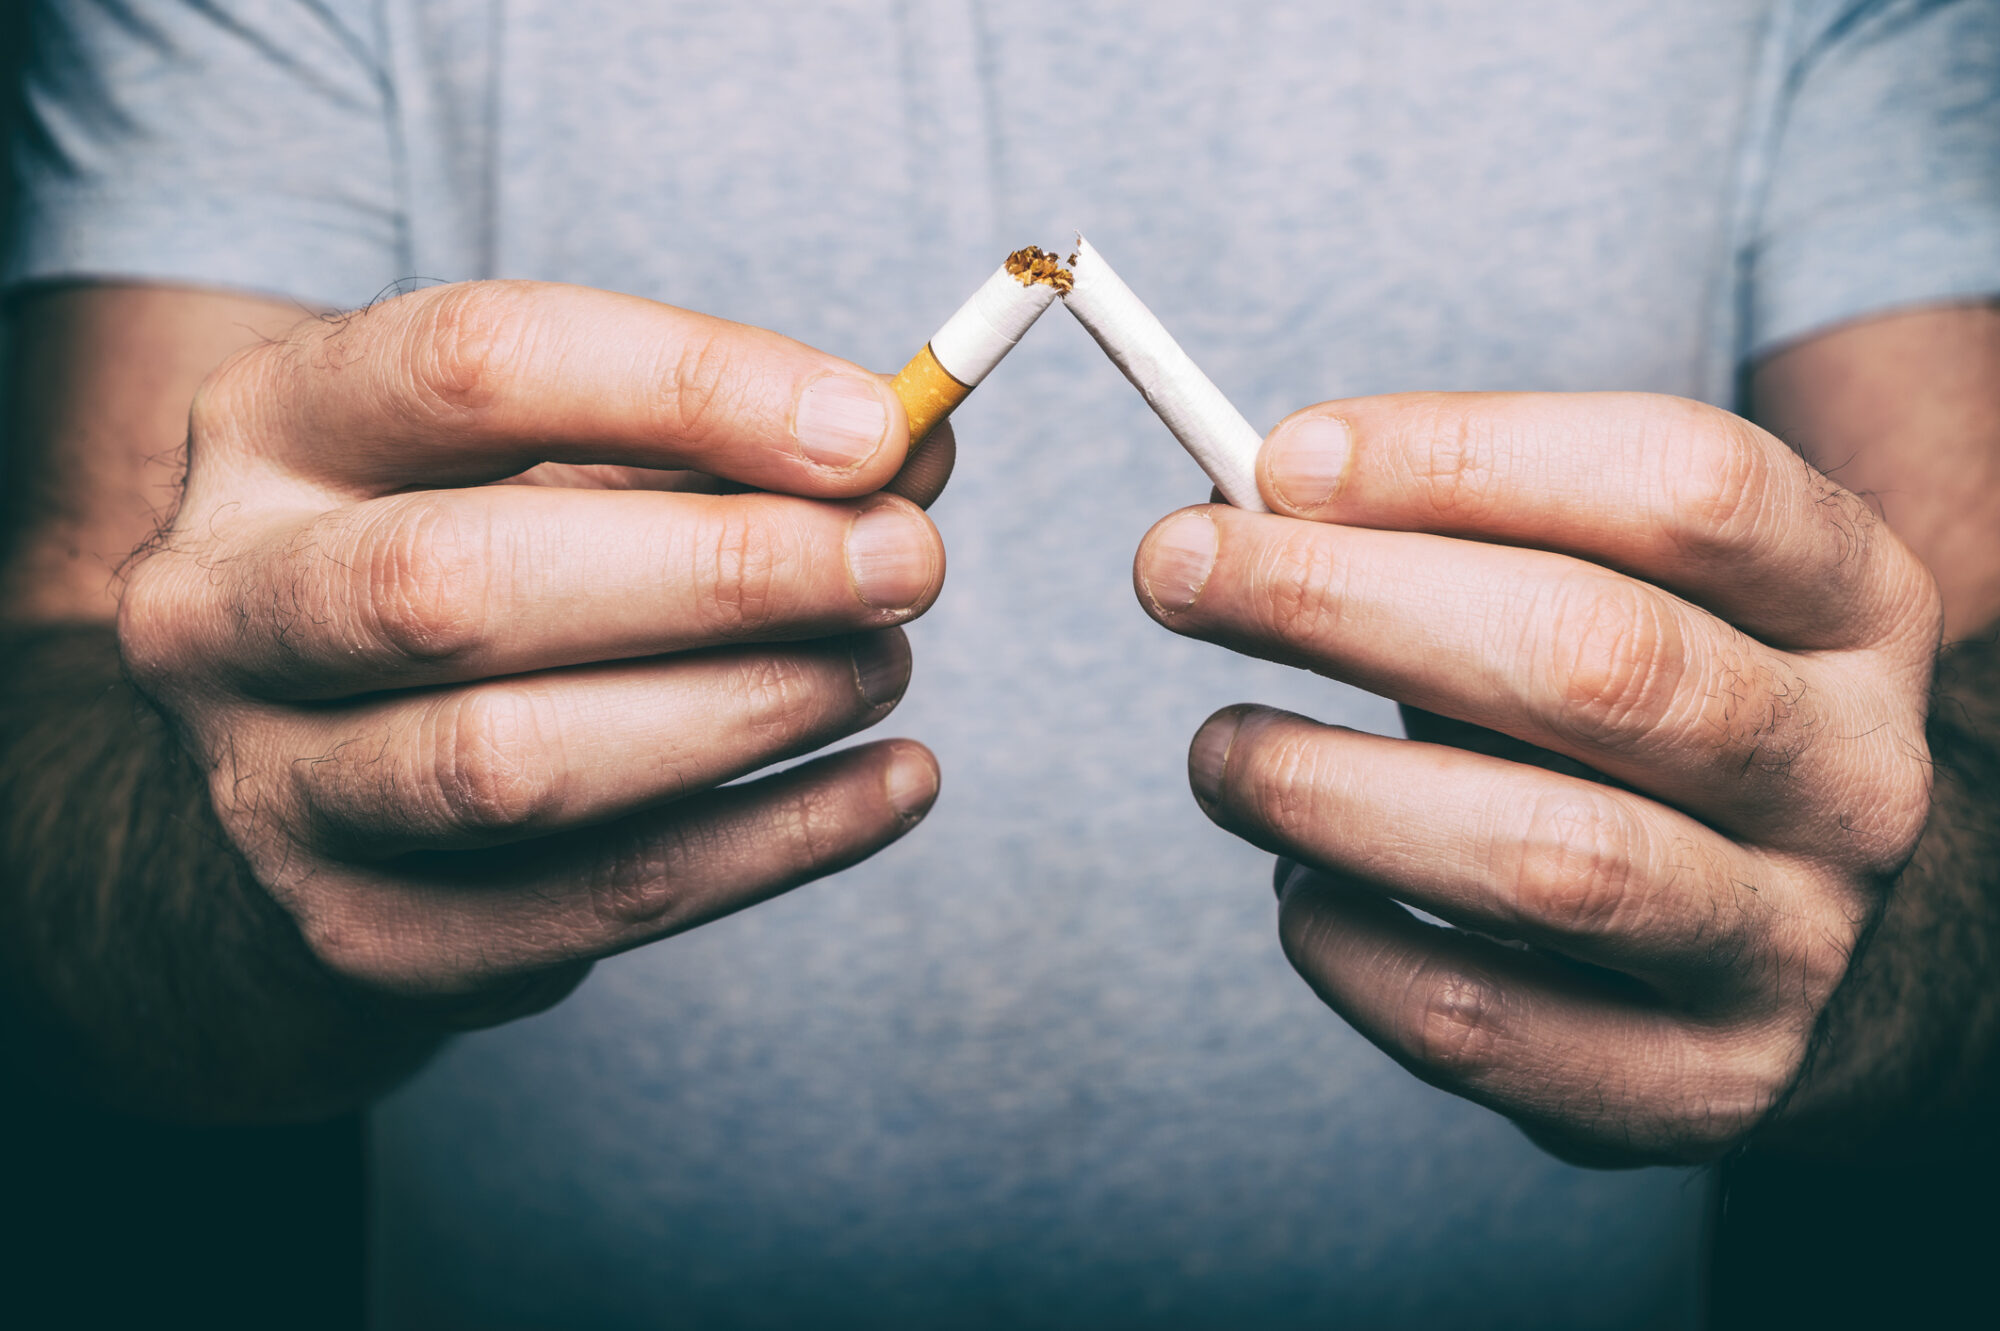 Smoking increases risk of bladder cancer recurrence